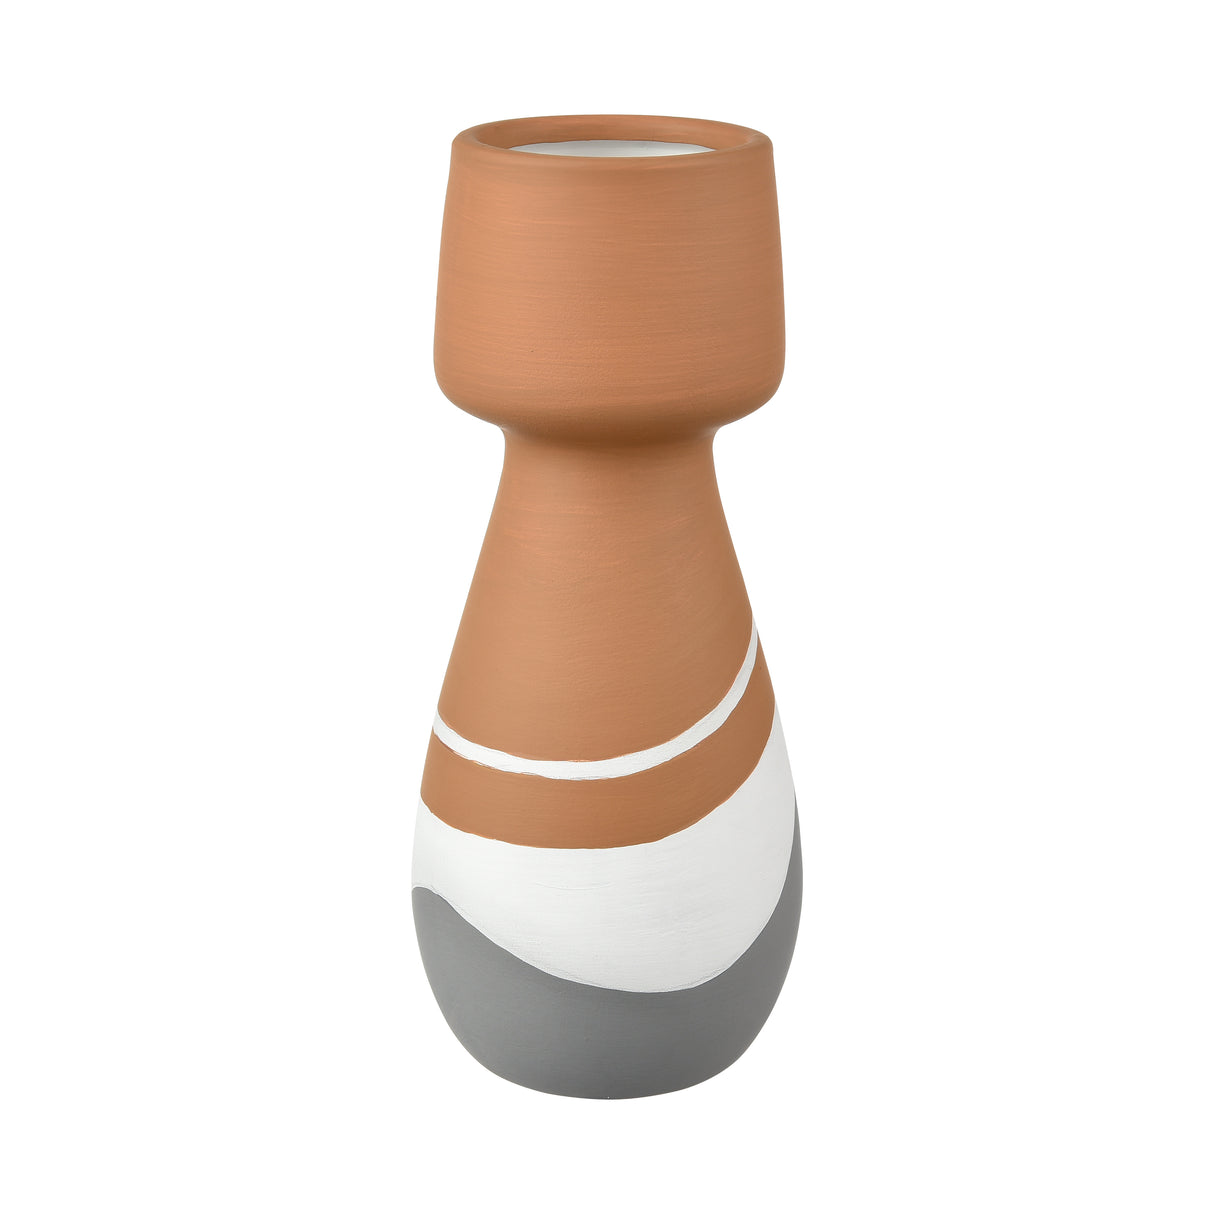 Elk S0017-11257 Eko Vase - Small Terracotta